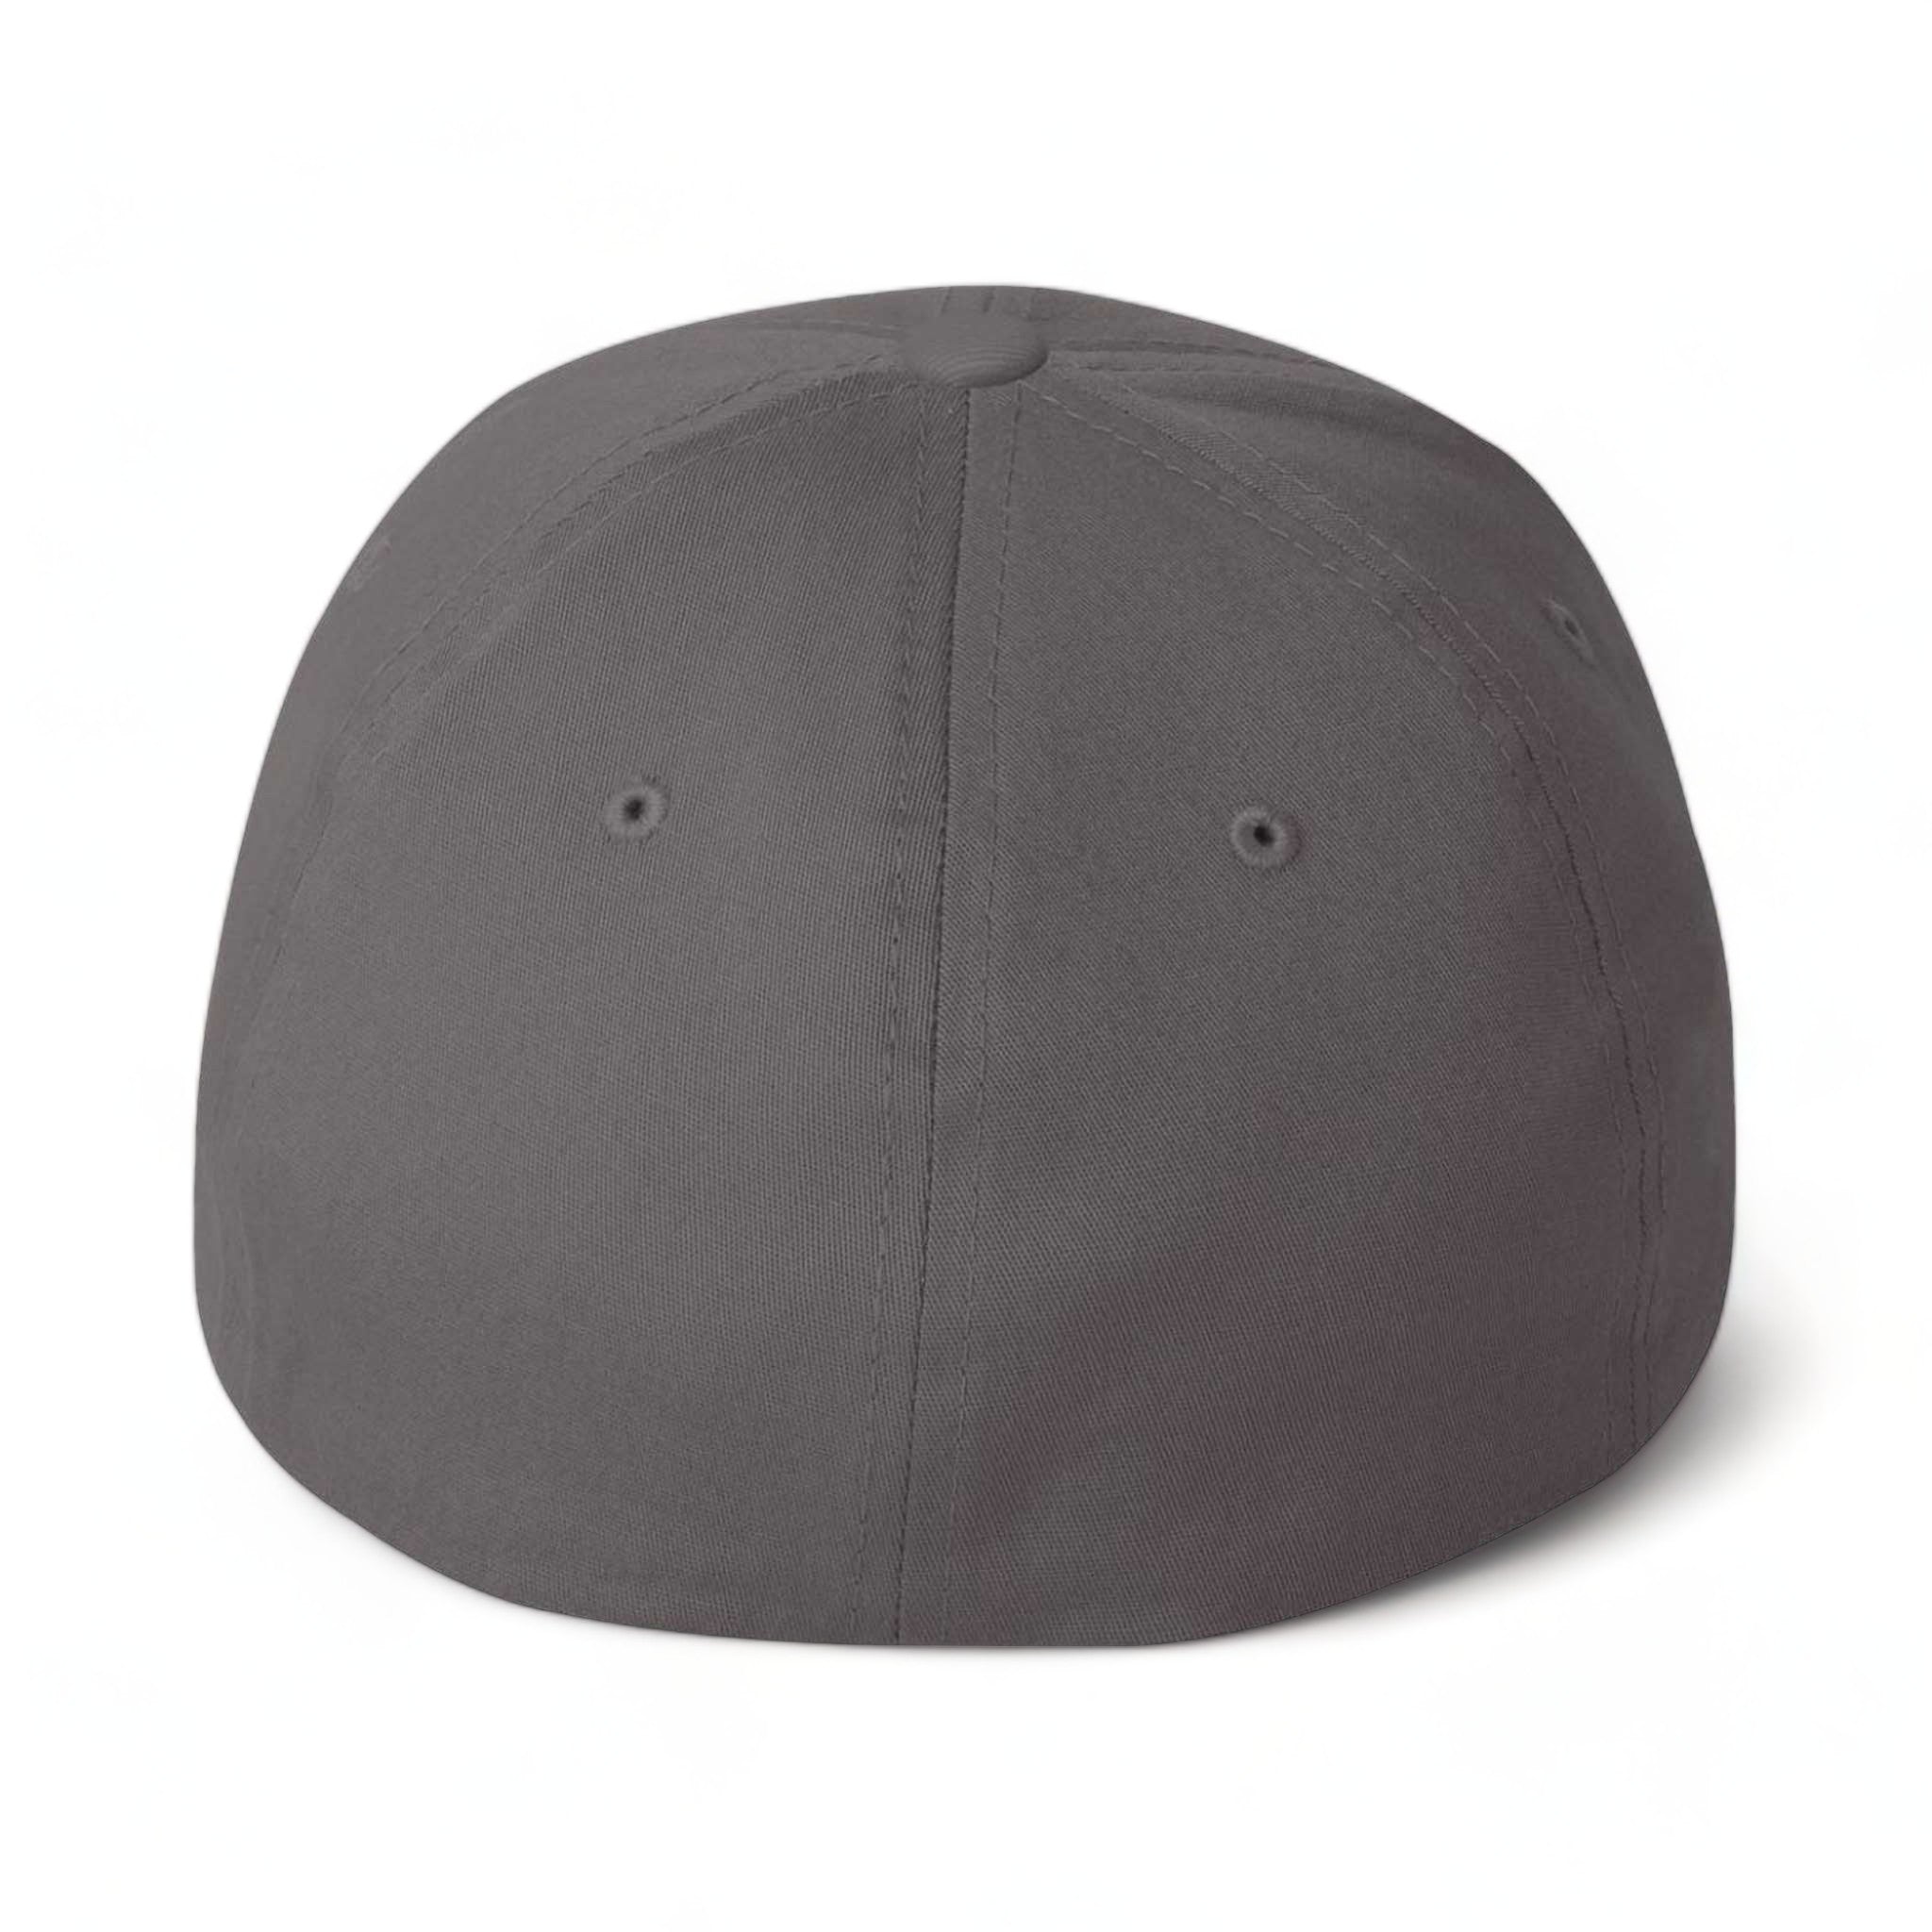 Back view of Flexfit 5001 custom hat in grey